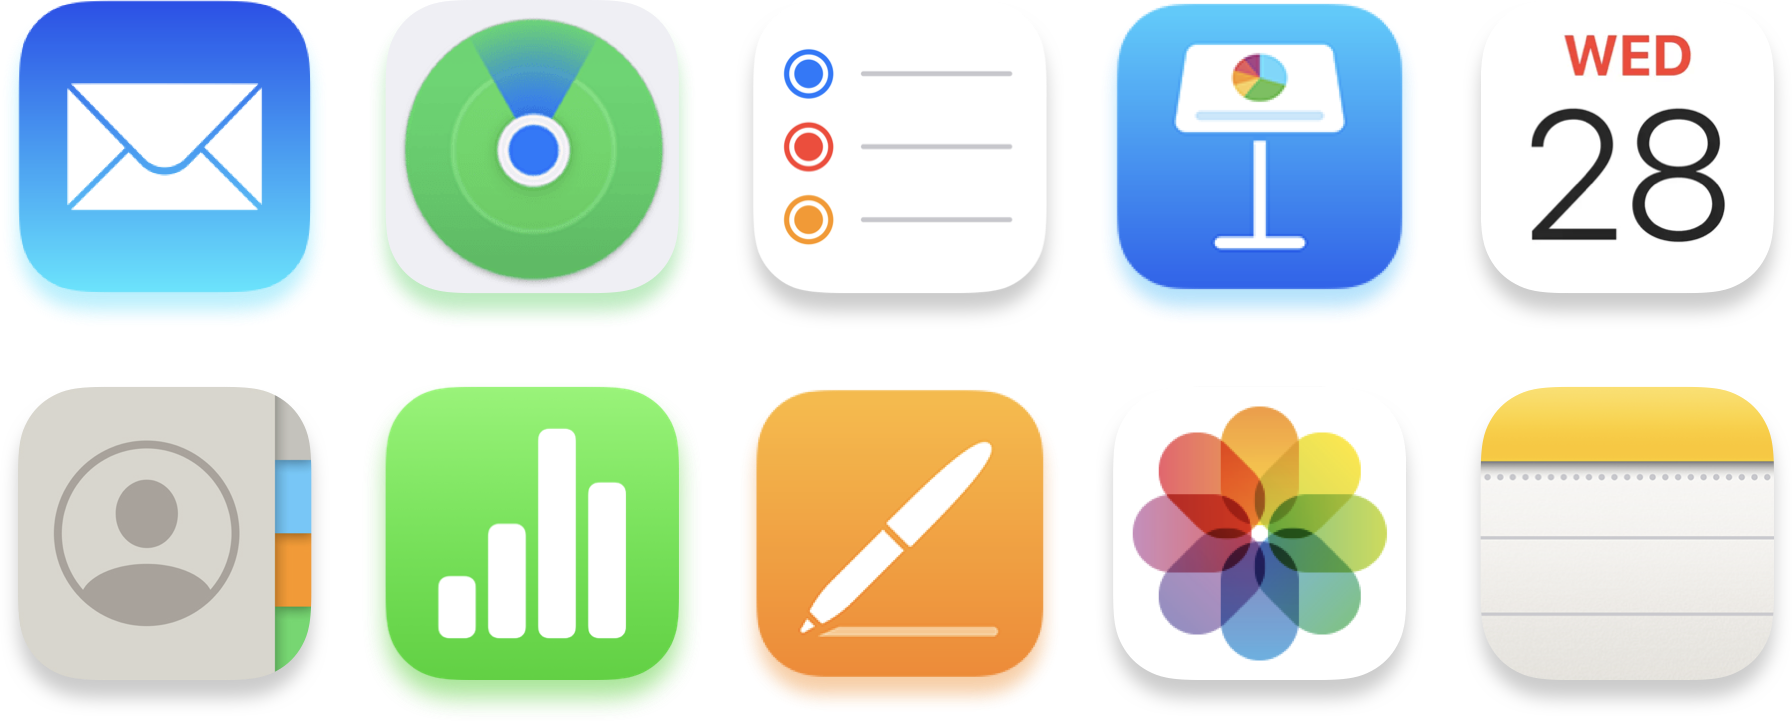 iCloud.com 上可用的 App 图标集合，包括“邮件”、“查找”和“提醒事项”